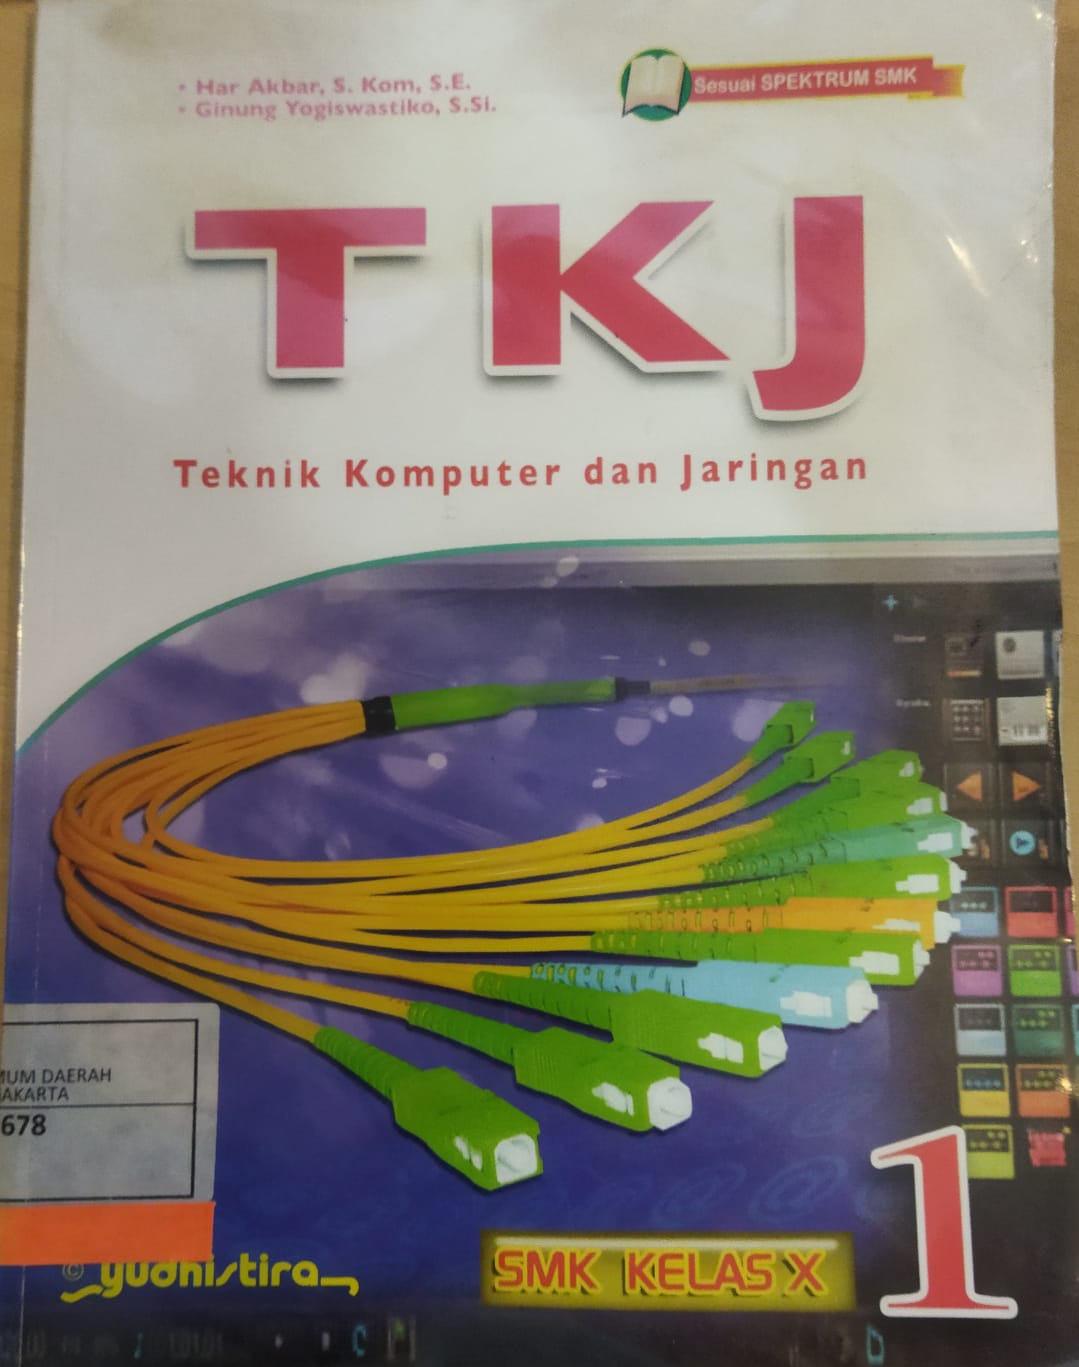 TKJ = Teknik komputer dan jaringan 1 : SMK kelas X